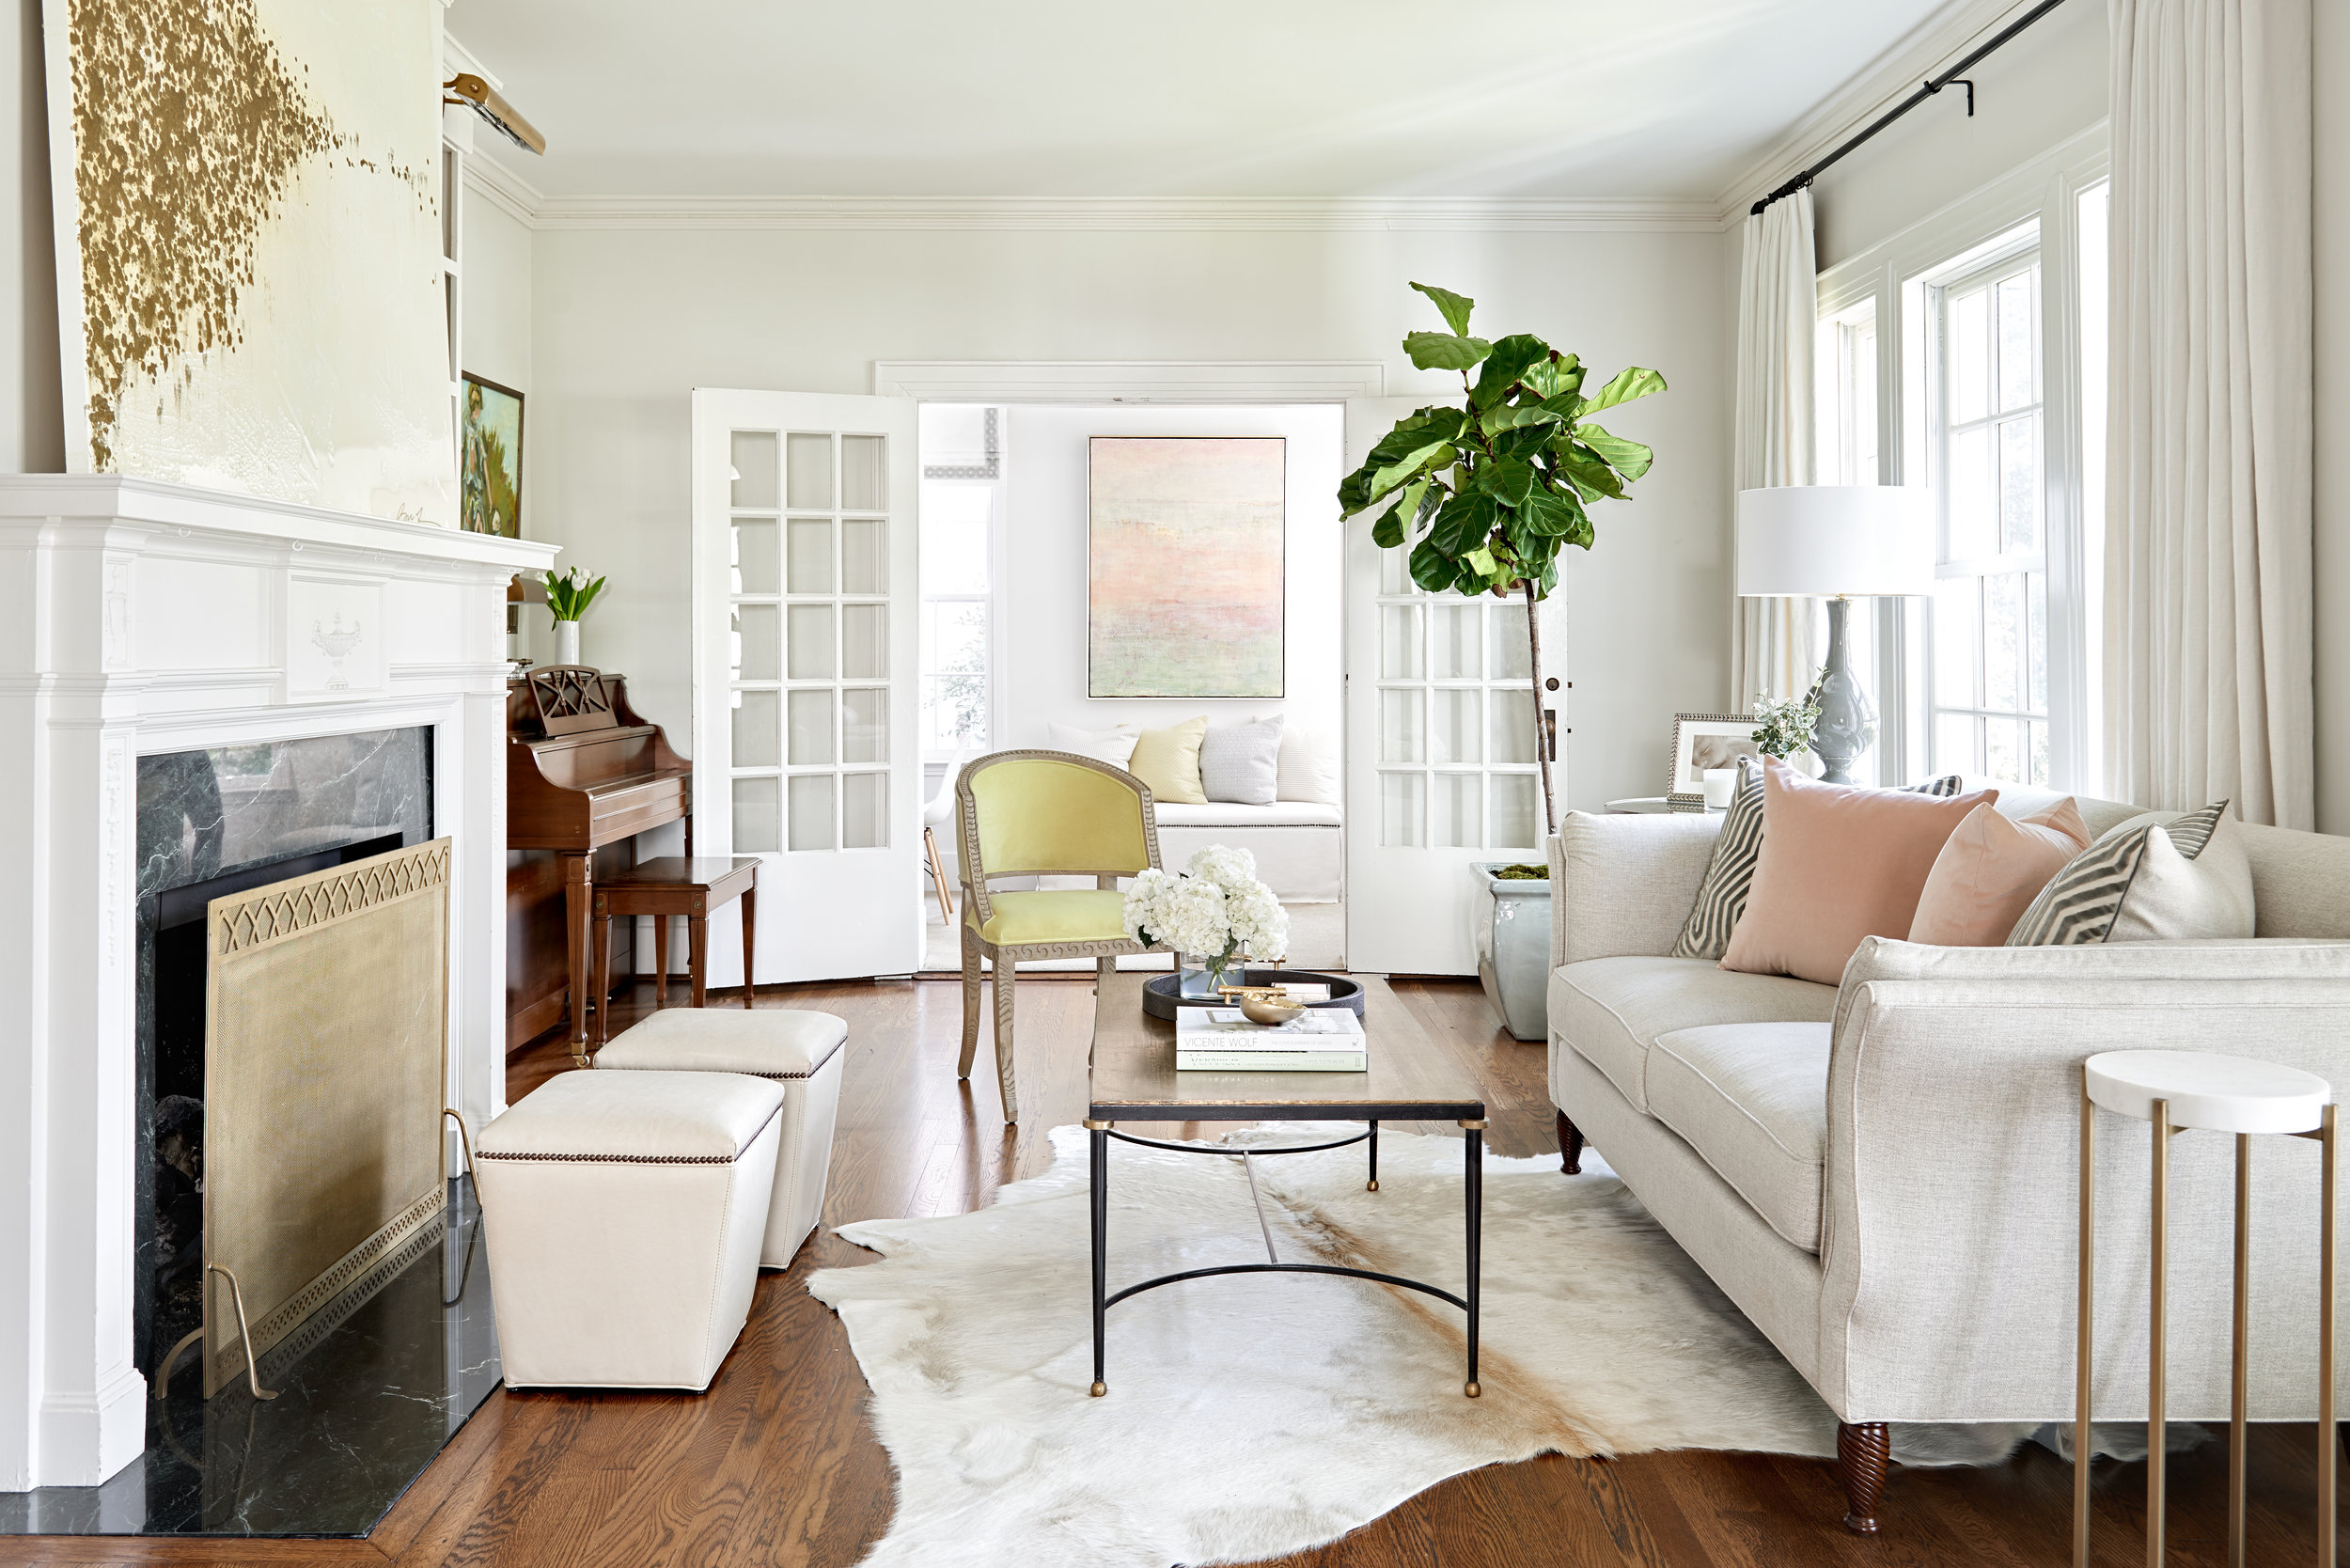 Bright and colorful living room design by Charleston based interior designer Lindsey Davis